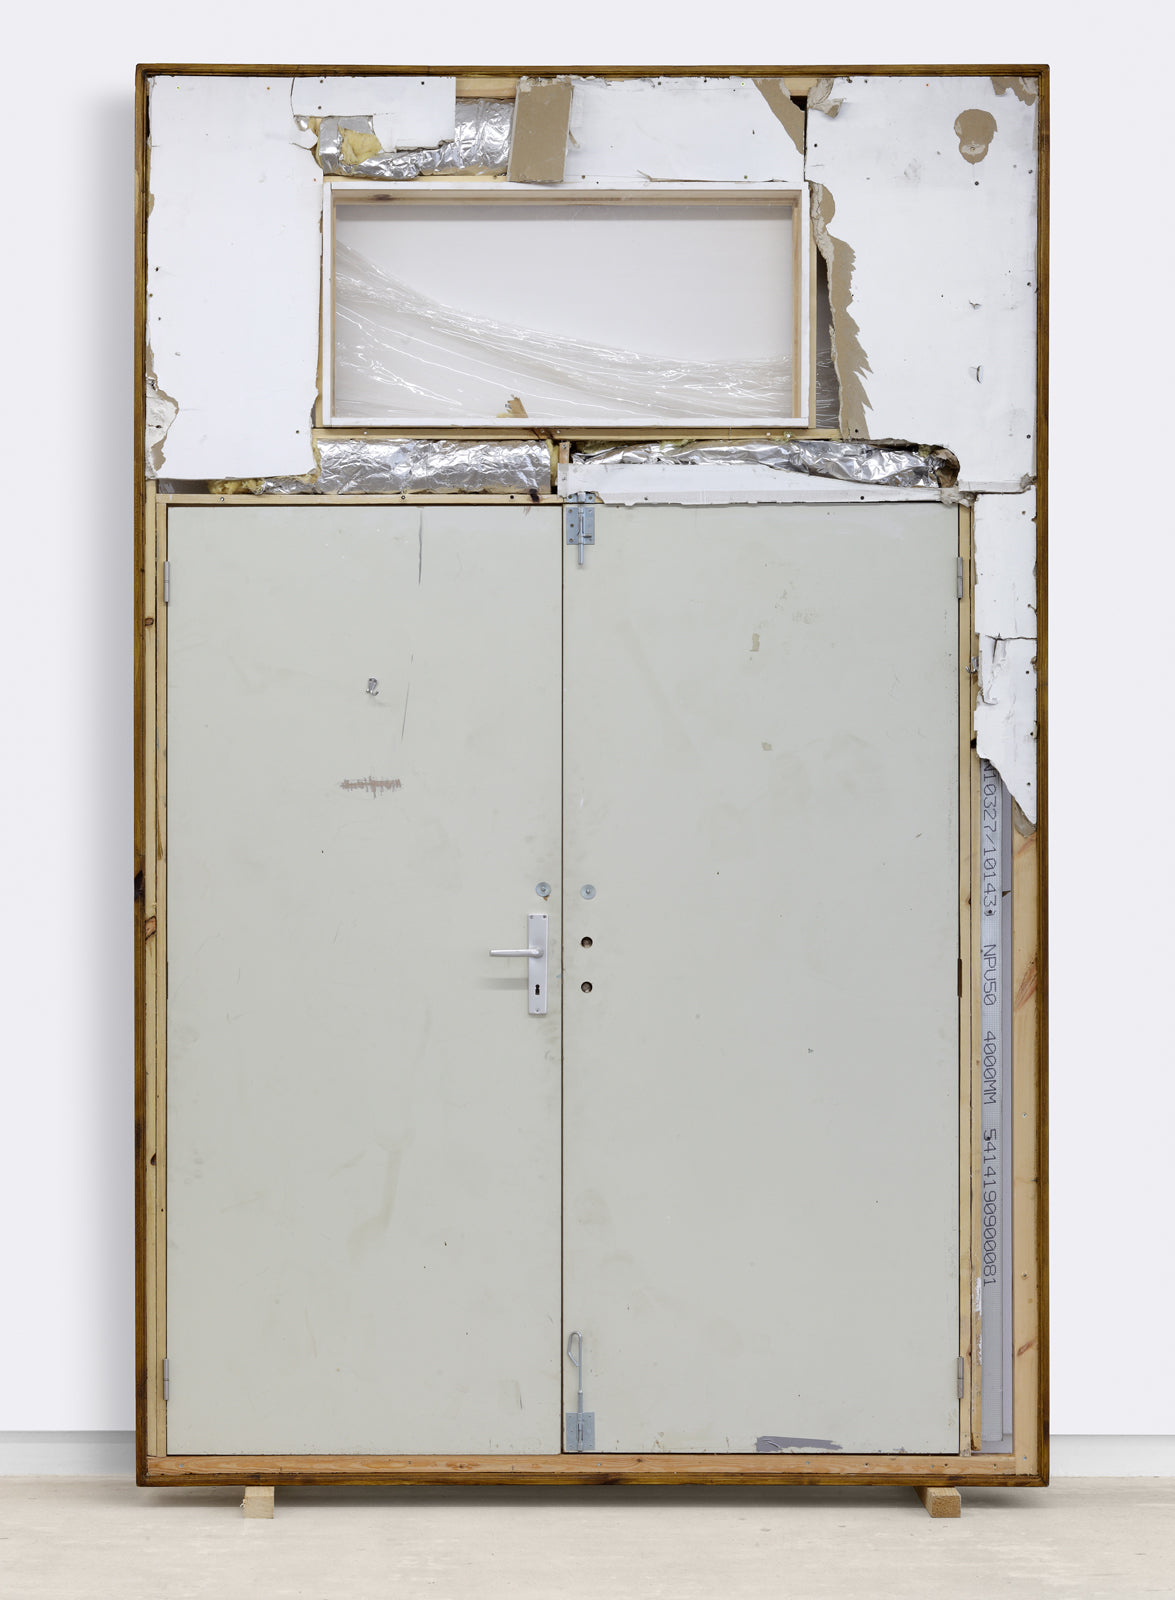 Joris Van de Moortel, Like a hurricane (you are like), Installation view, 2010, Galerie Michael Janssen Berlin